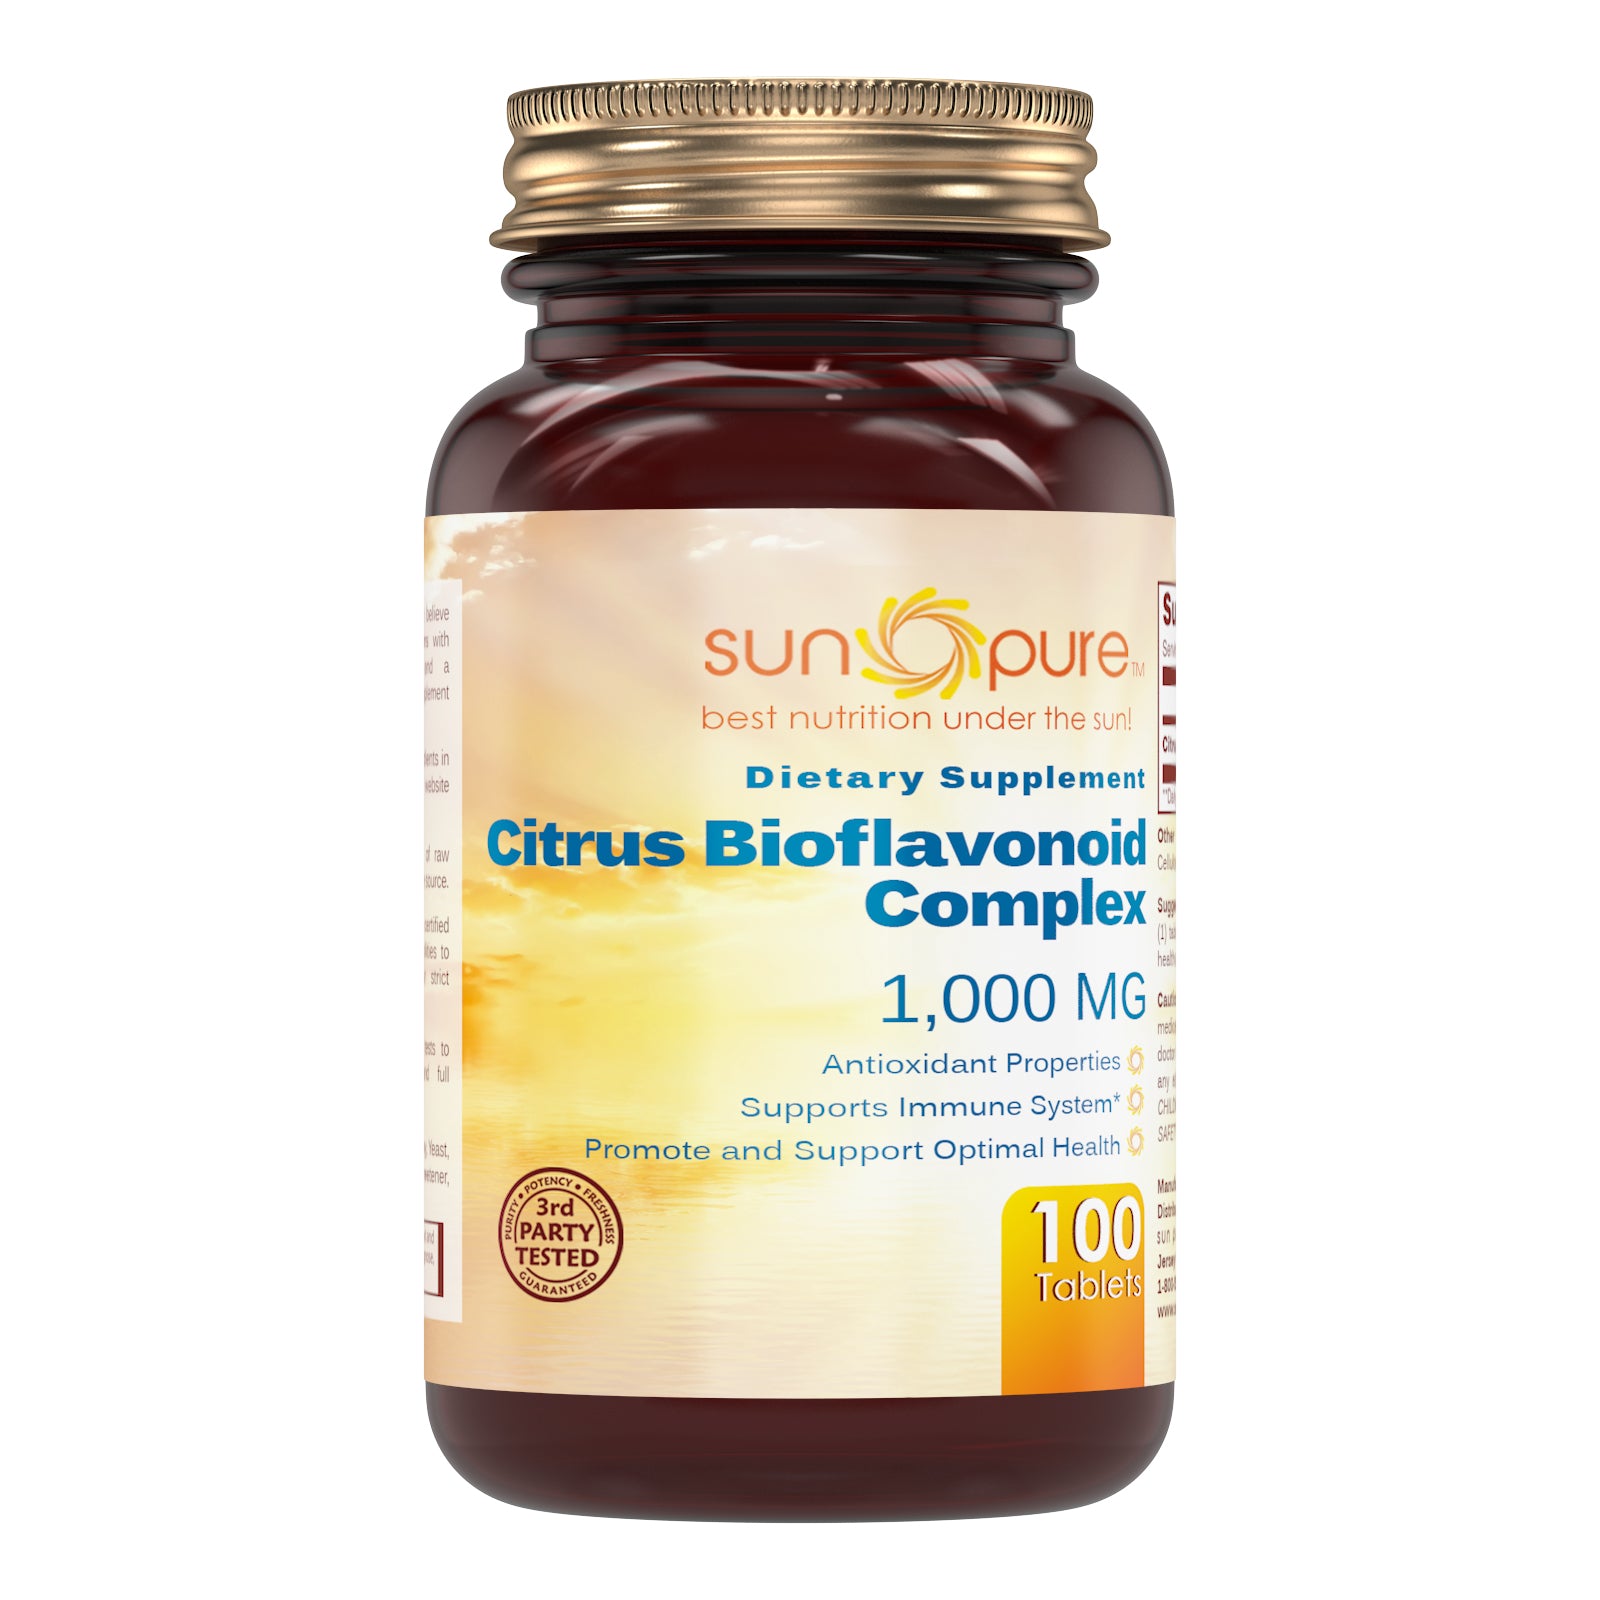 Citrus bioflavonoids and sun protection